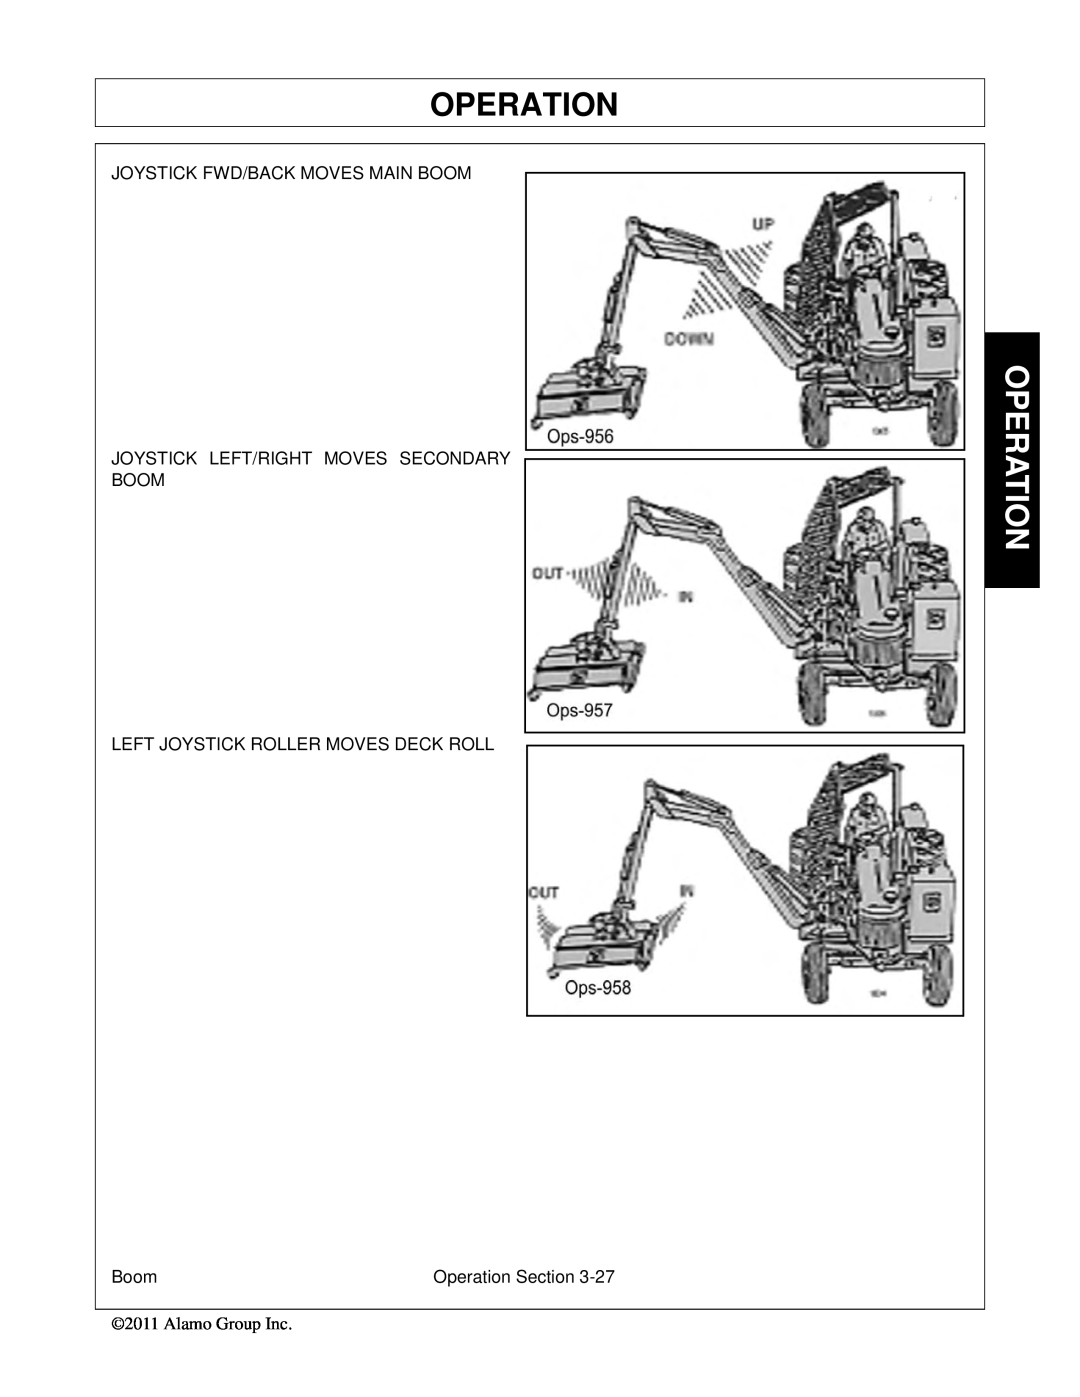 Tiger Products Co., Ltd 5093E manual Operation, Joystick Fwd/Back Moves Main Boom, Joystick Left/Right Moves Secondary Boom 